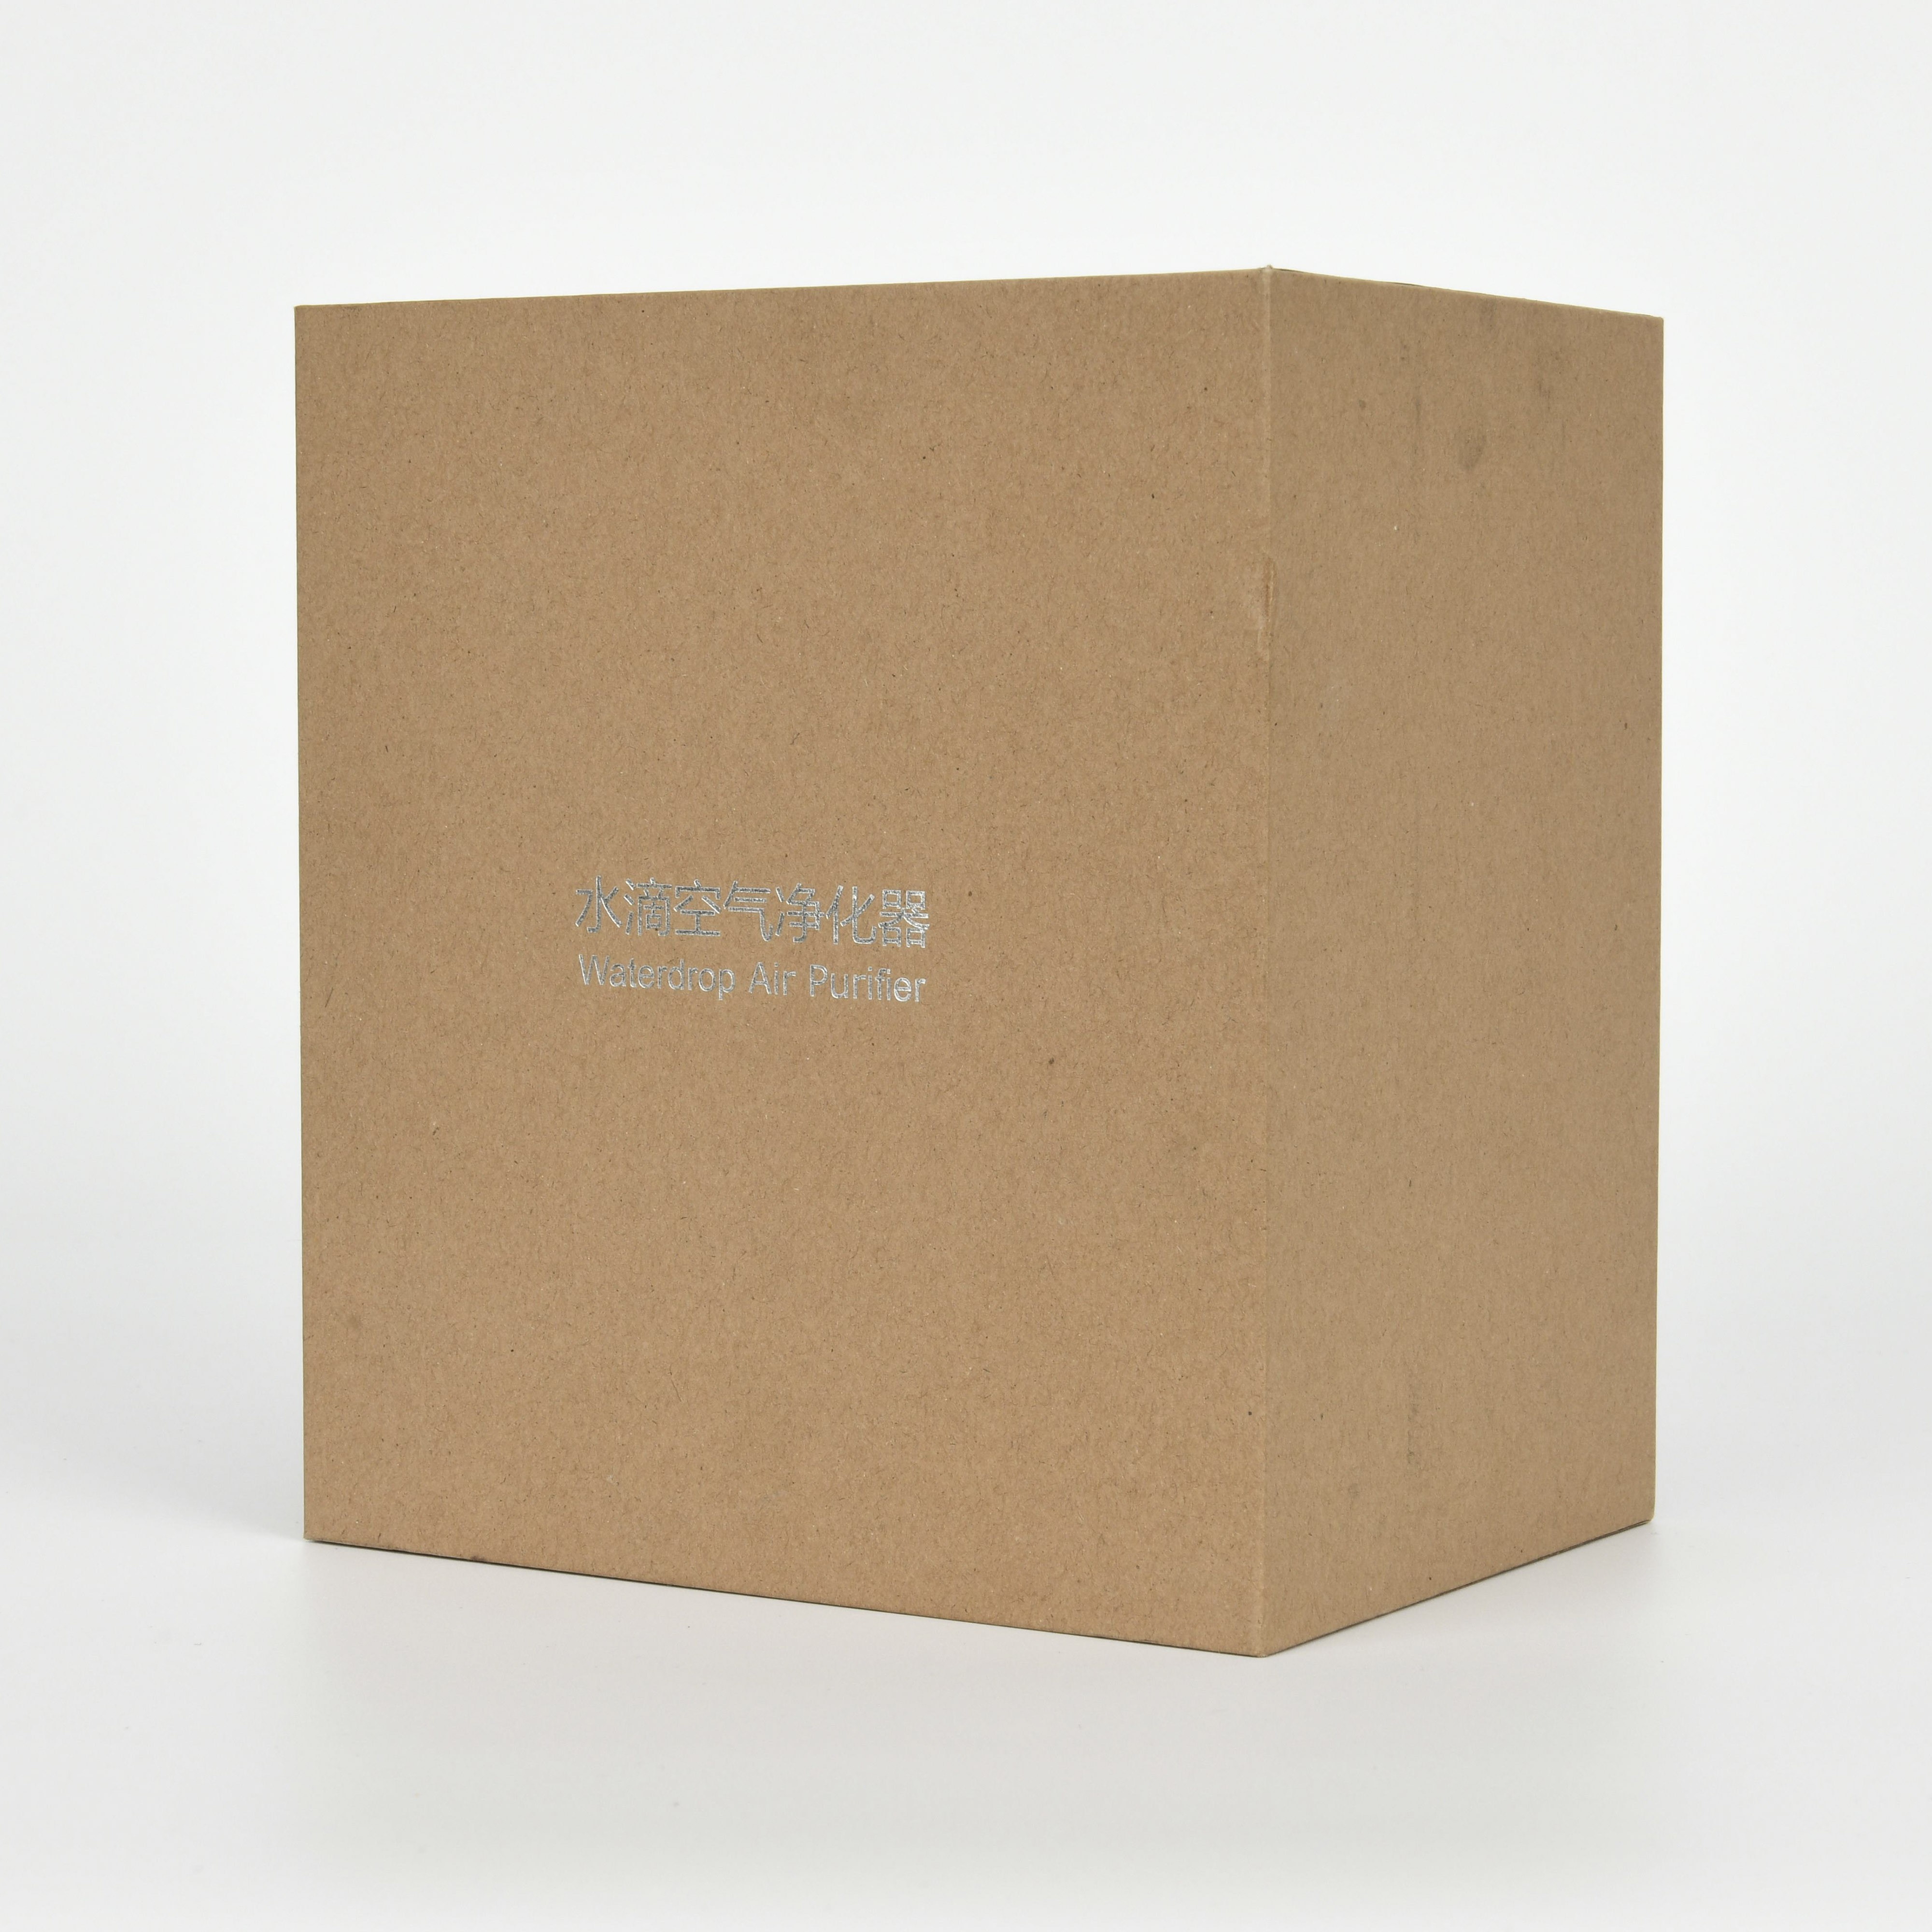 Custom Design Printing Logo Eco-Friendly Brown Kraft Paper, Gift Box For Packaging